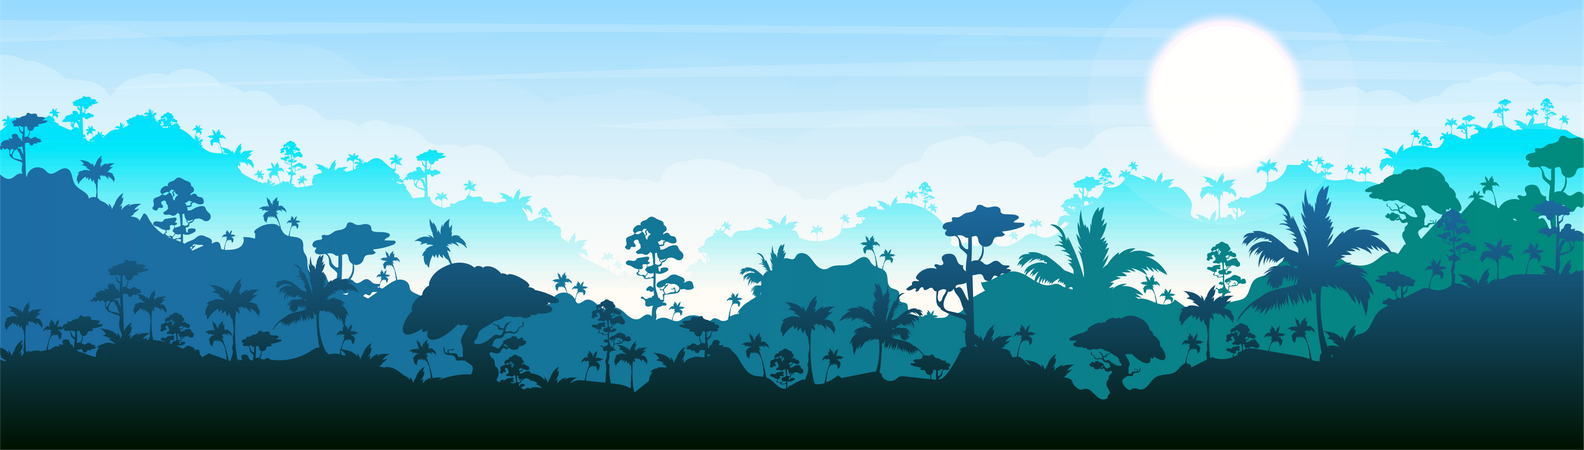 Blue forest scenery Illustration